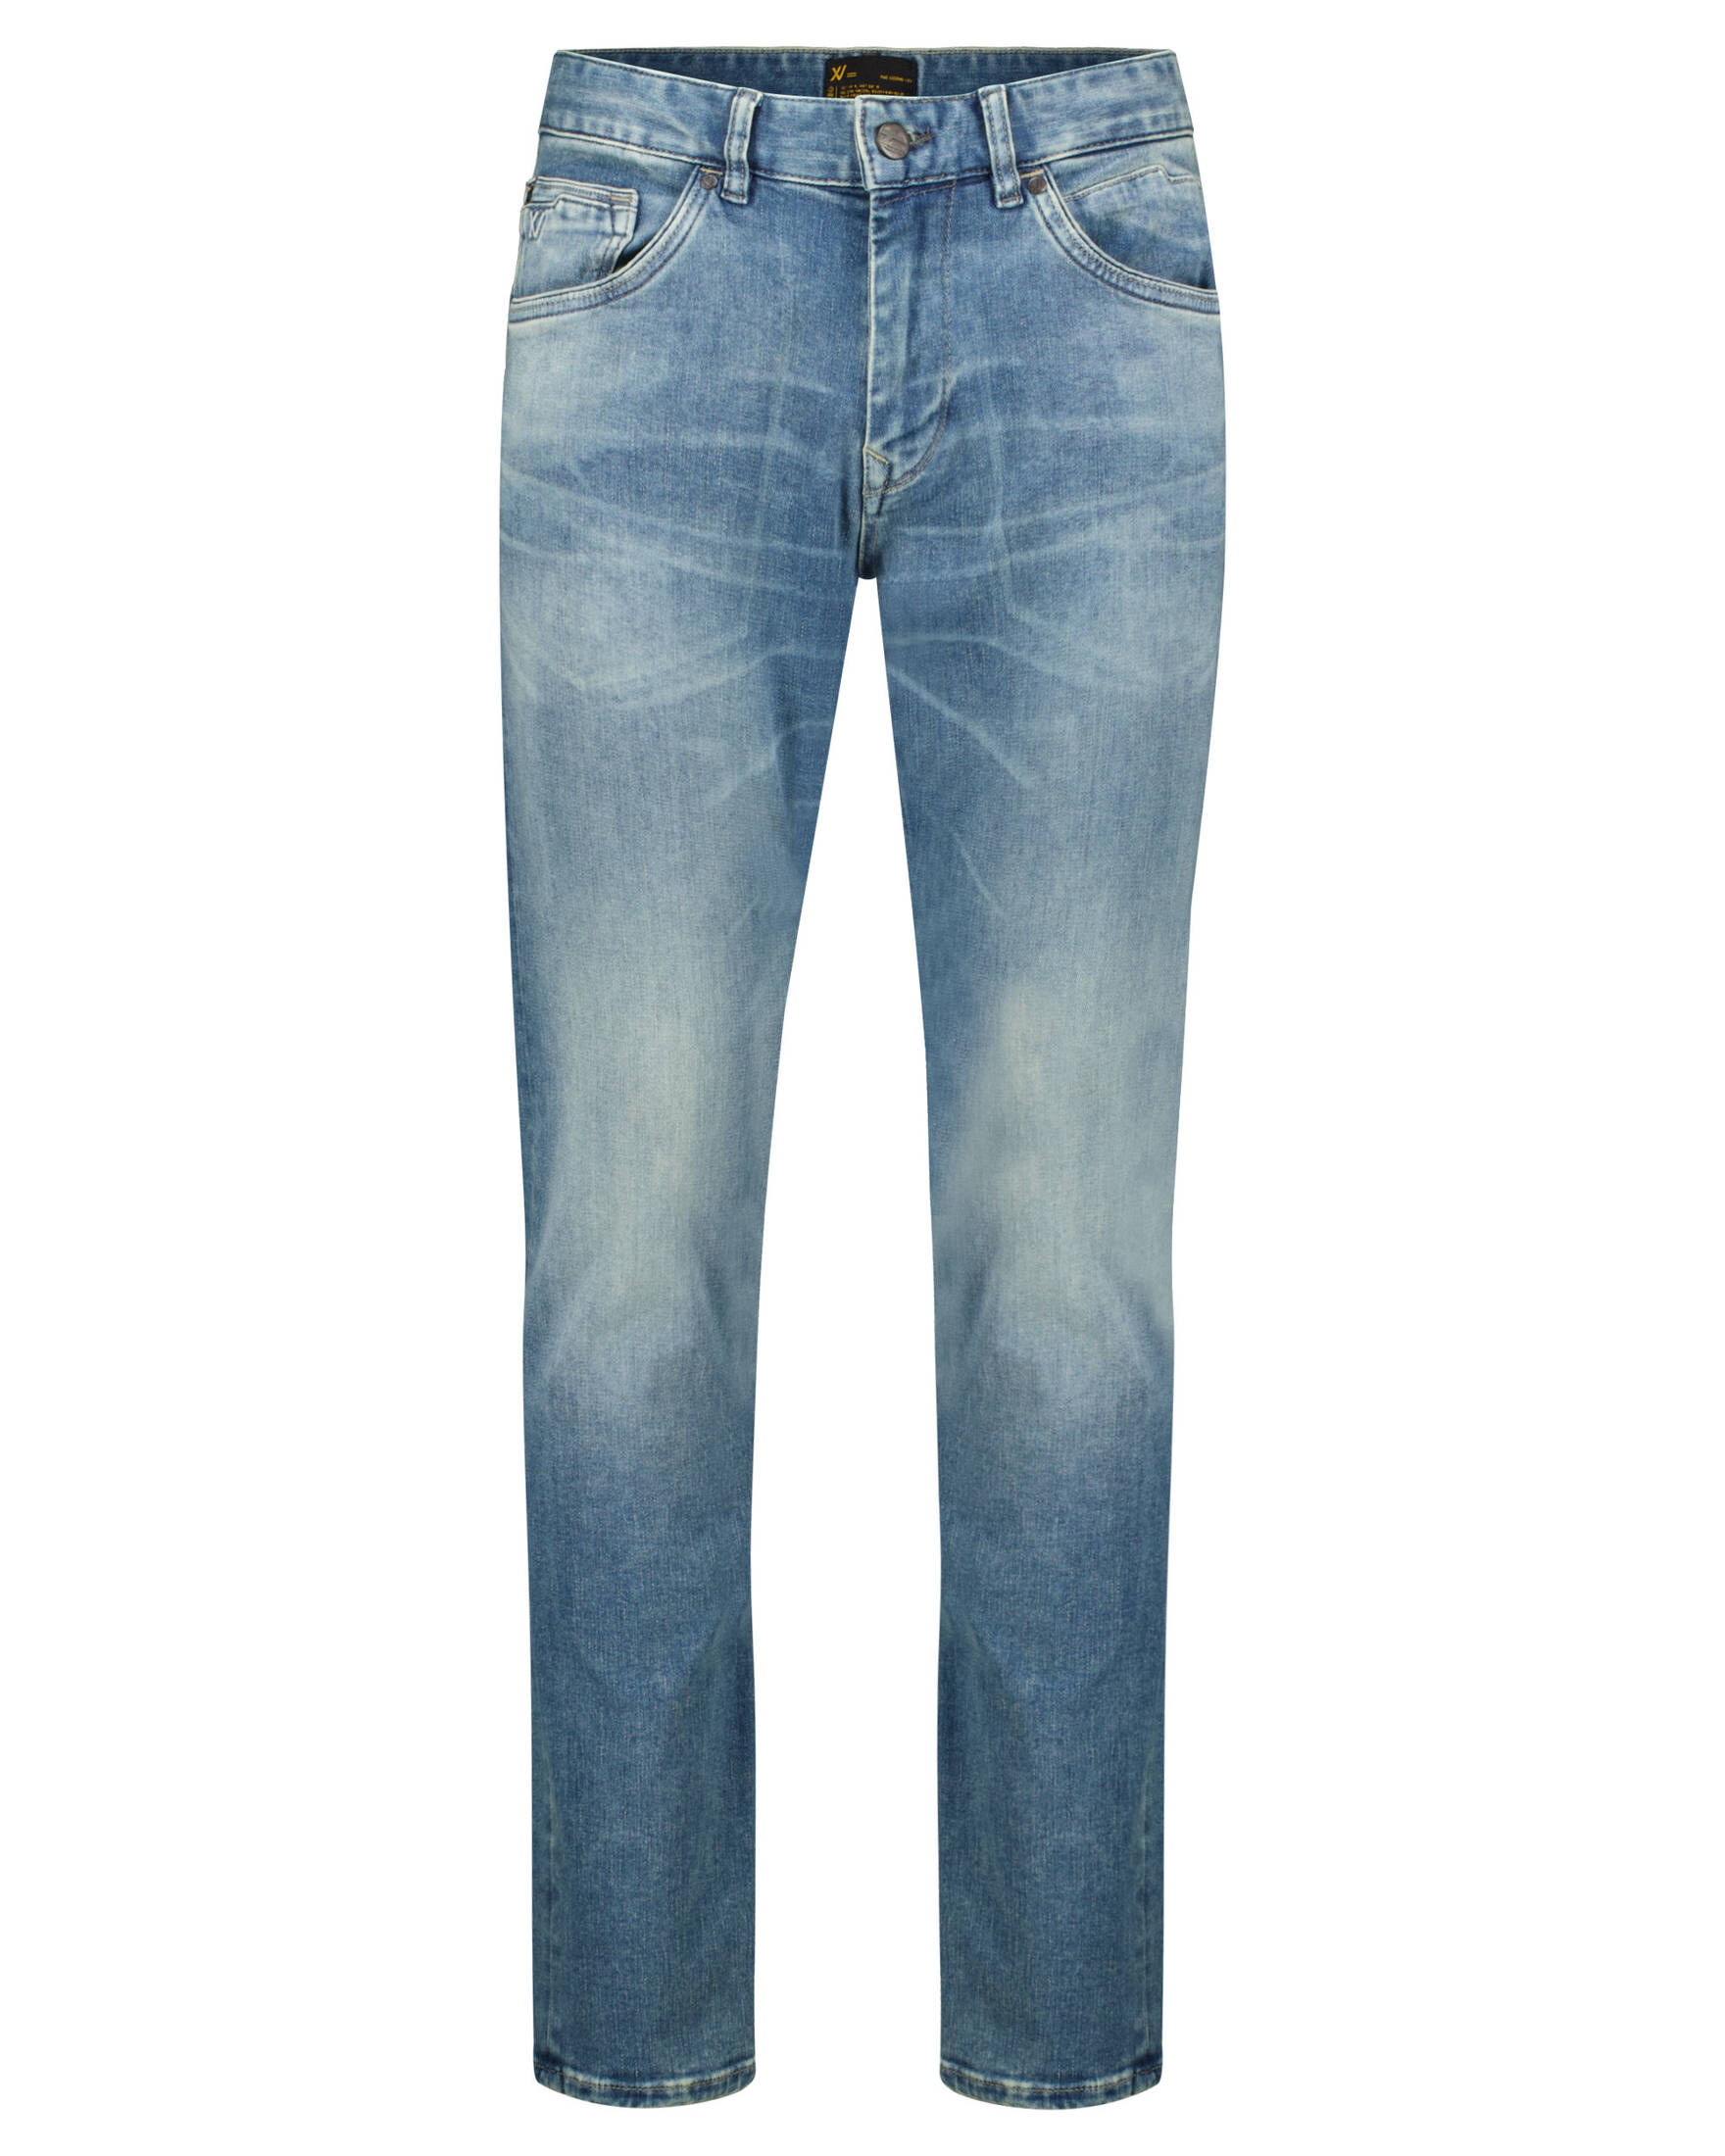 PME Legend Herren Jeans XV SKY DIRT WASH Slim Fit kaufen | engelhorn